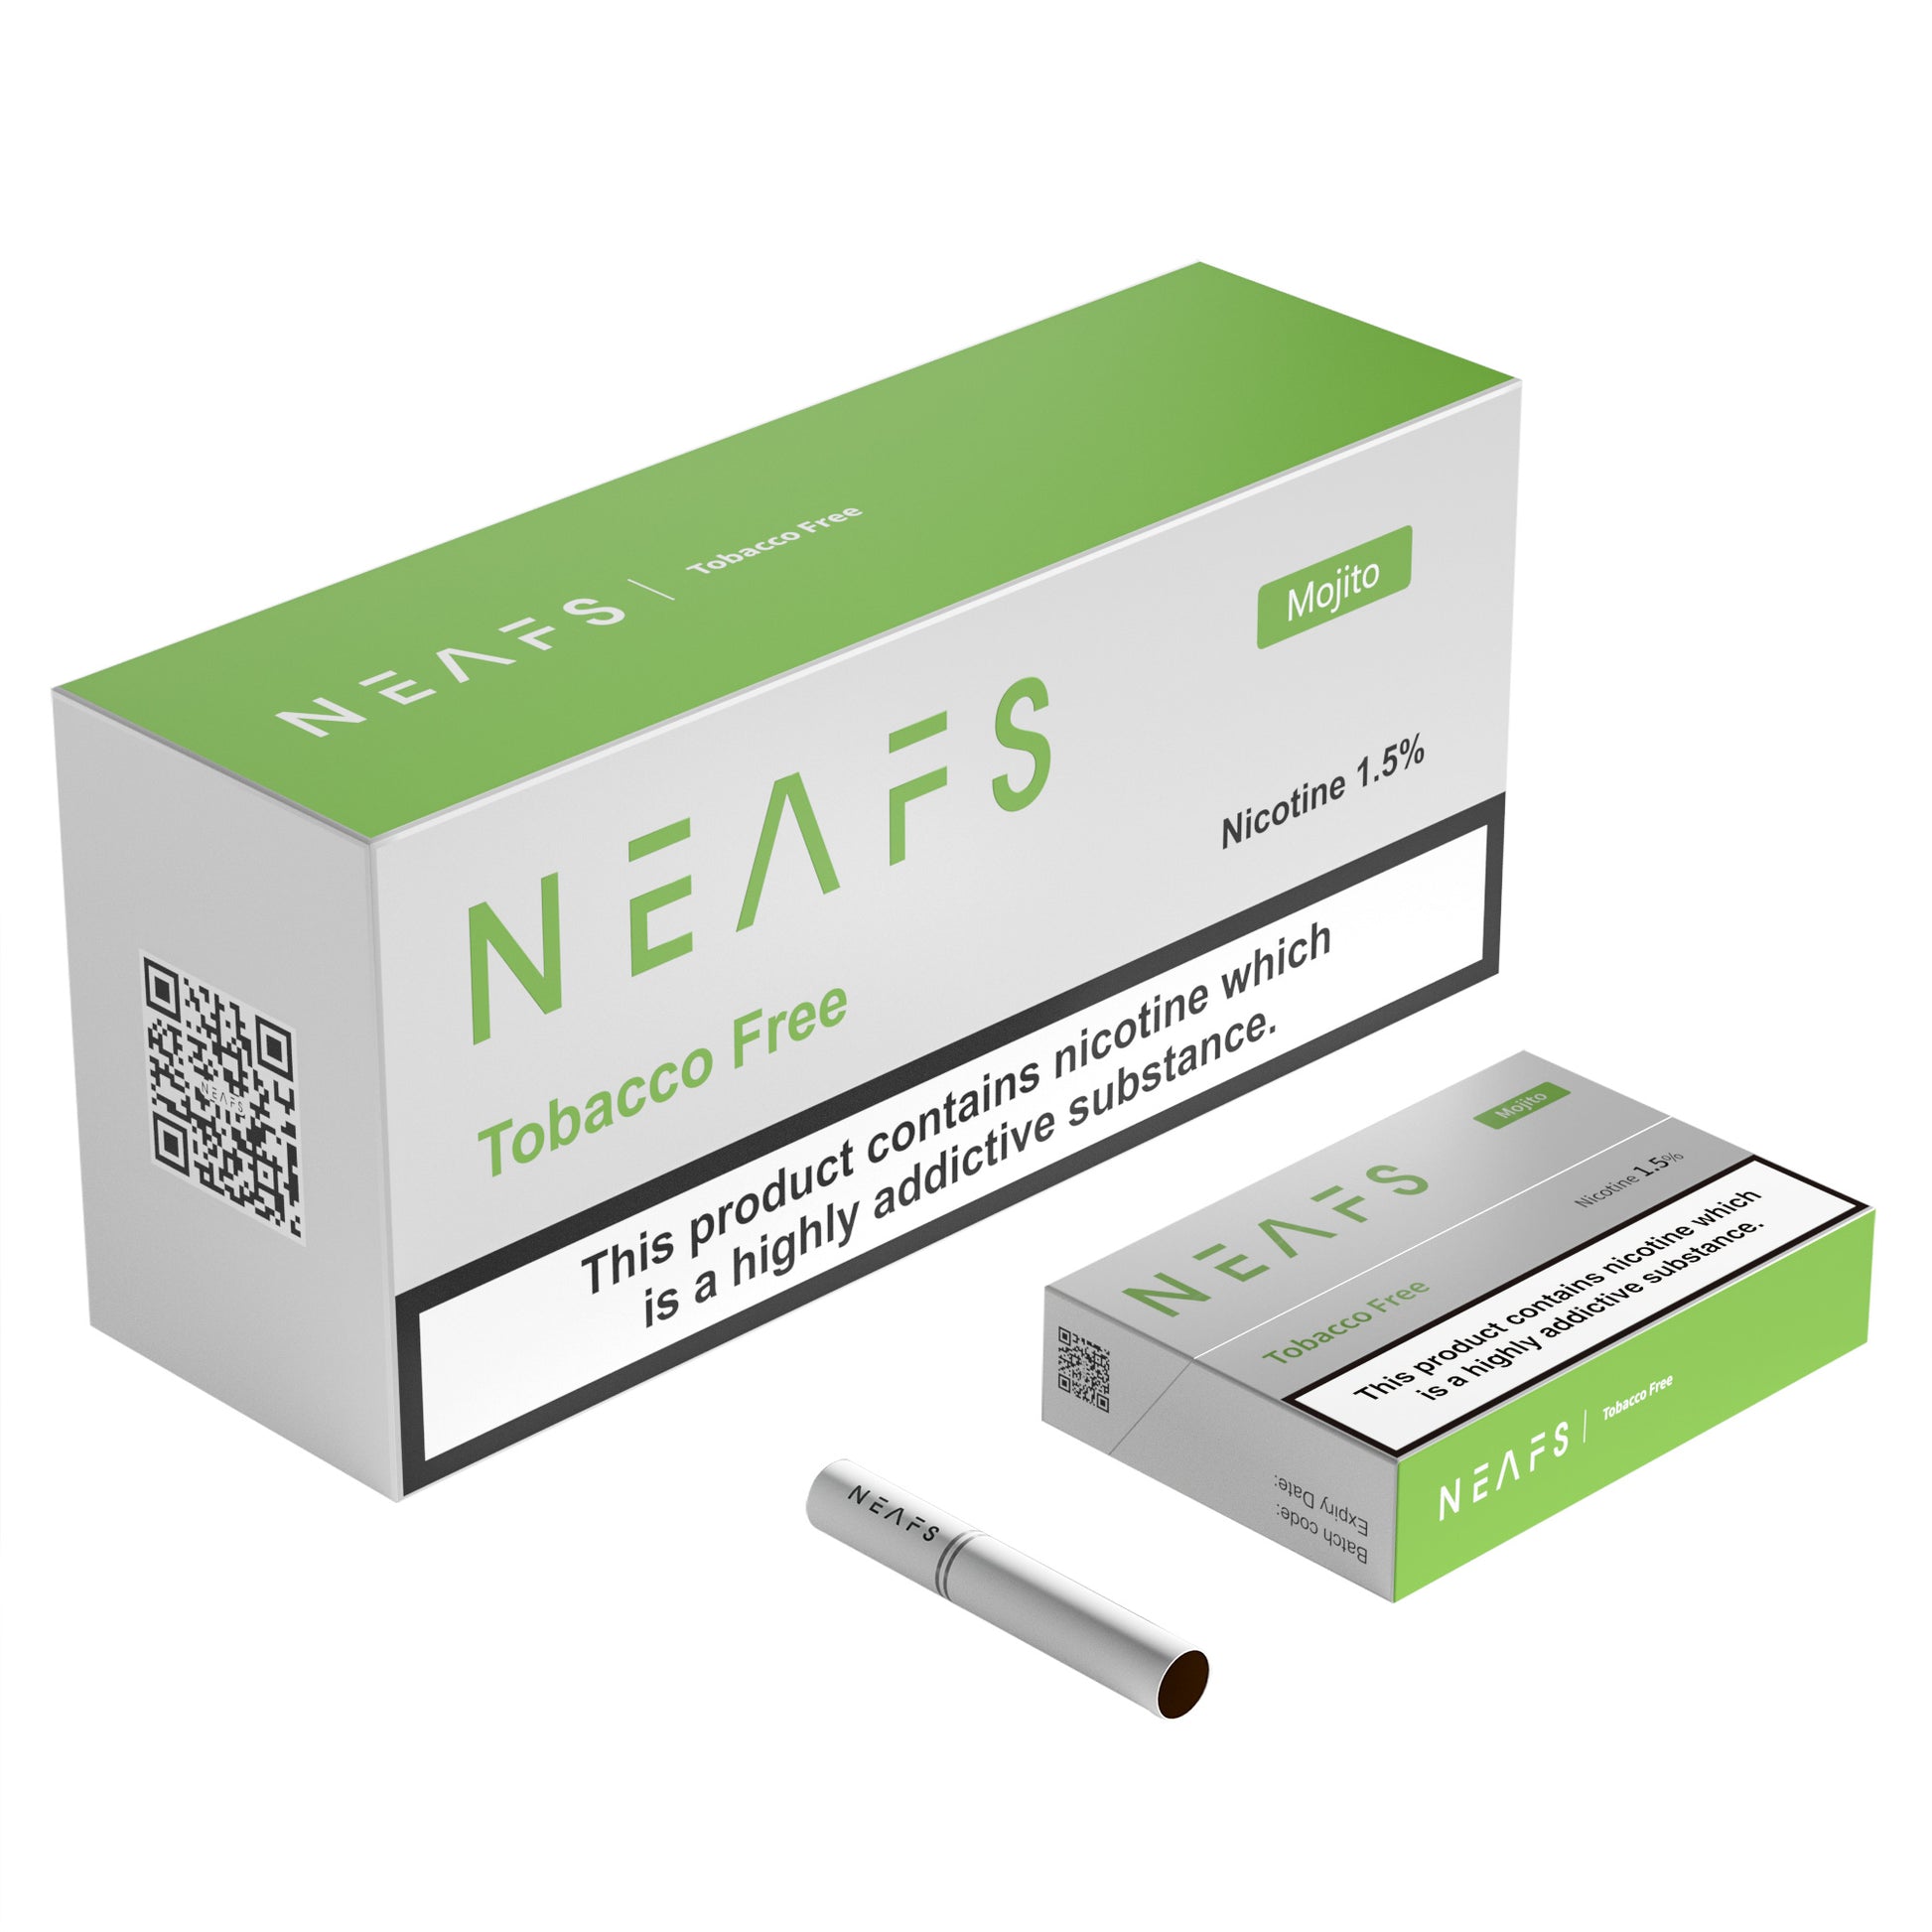 NEAFS Mojito Tobacco Free Heated Sticks